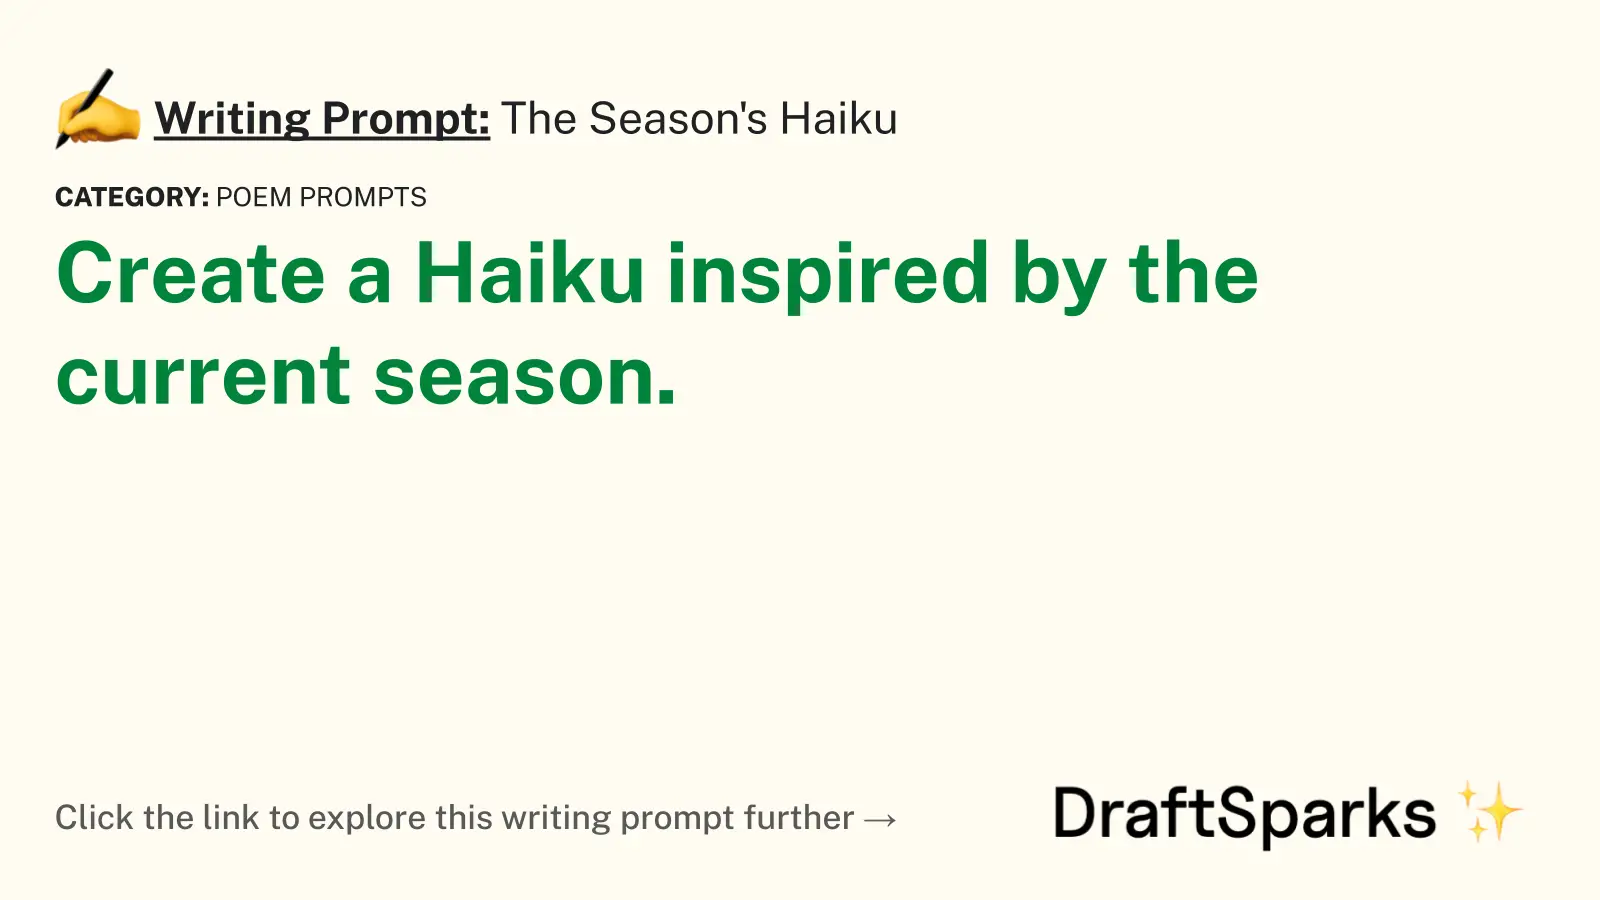 The Season’s Haiku